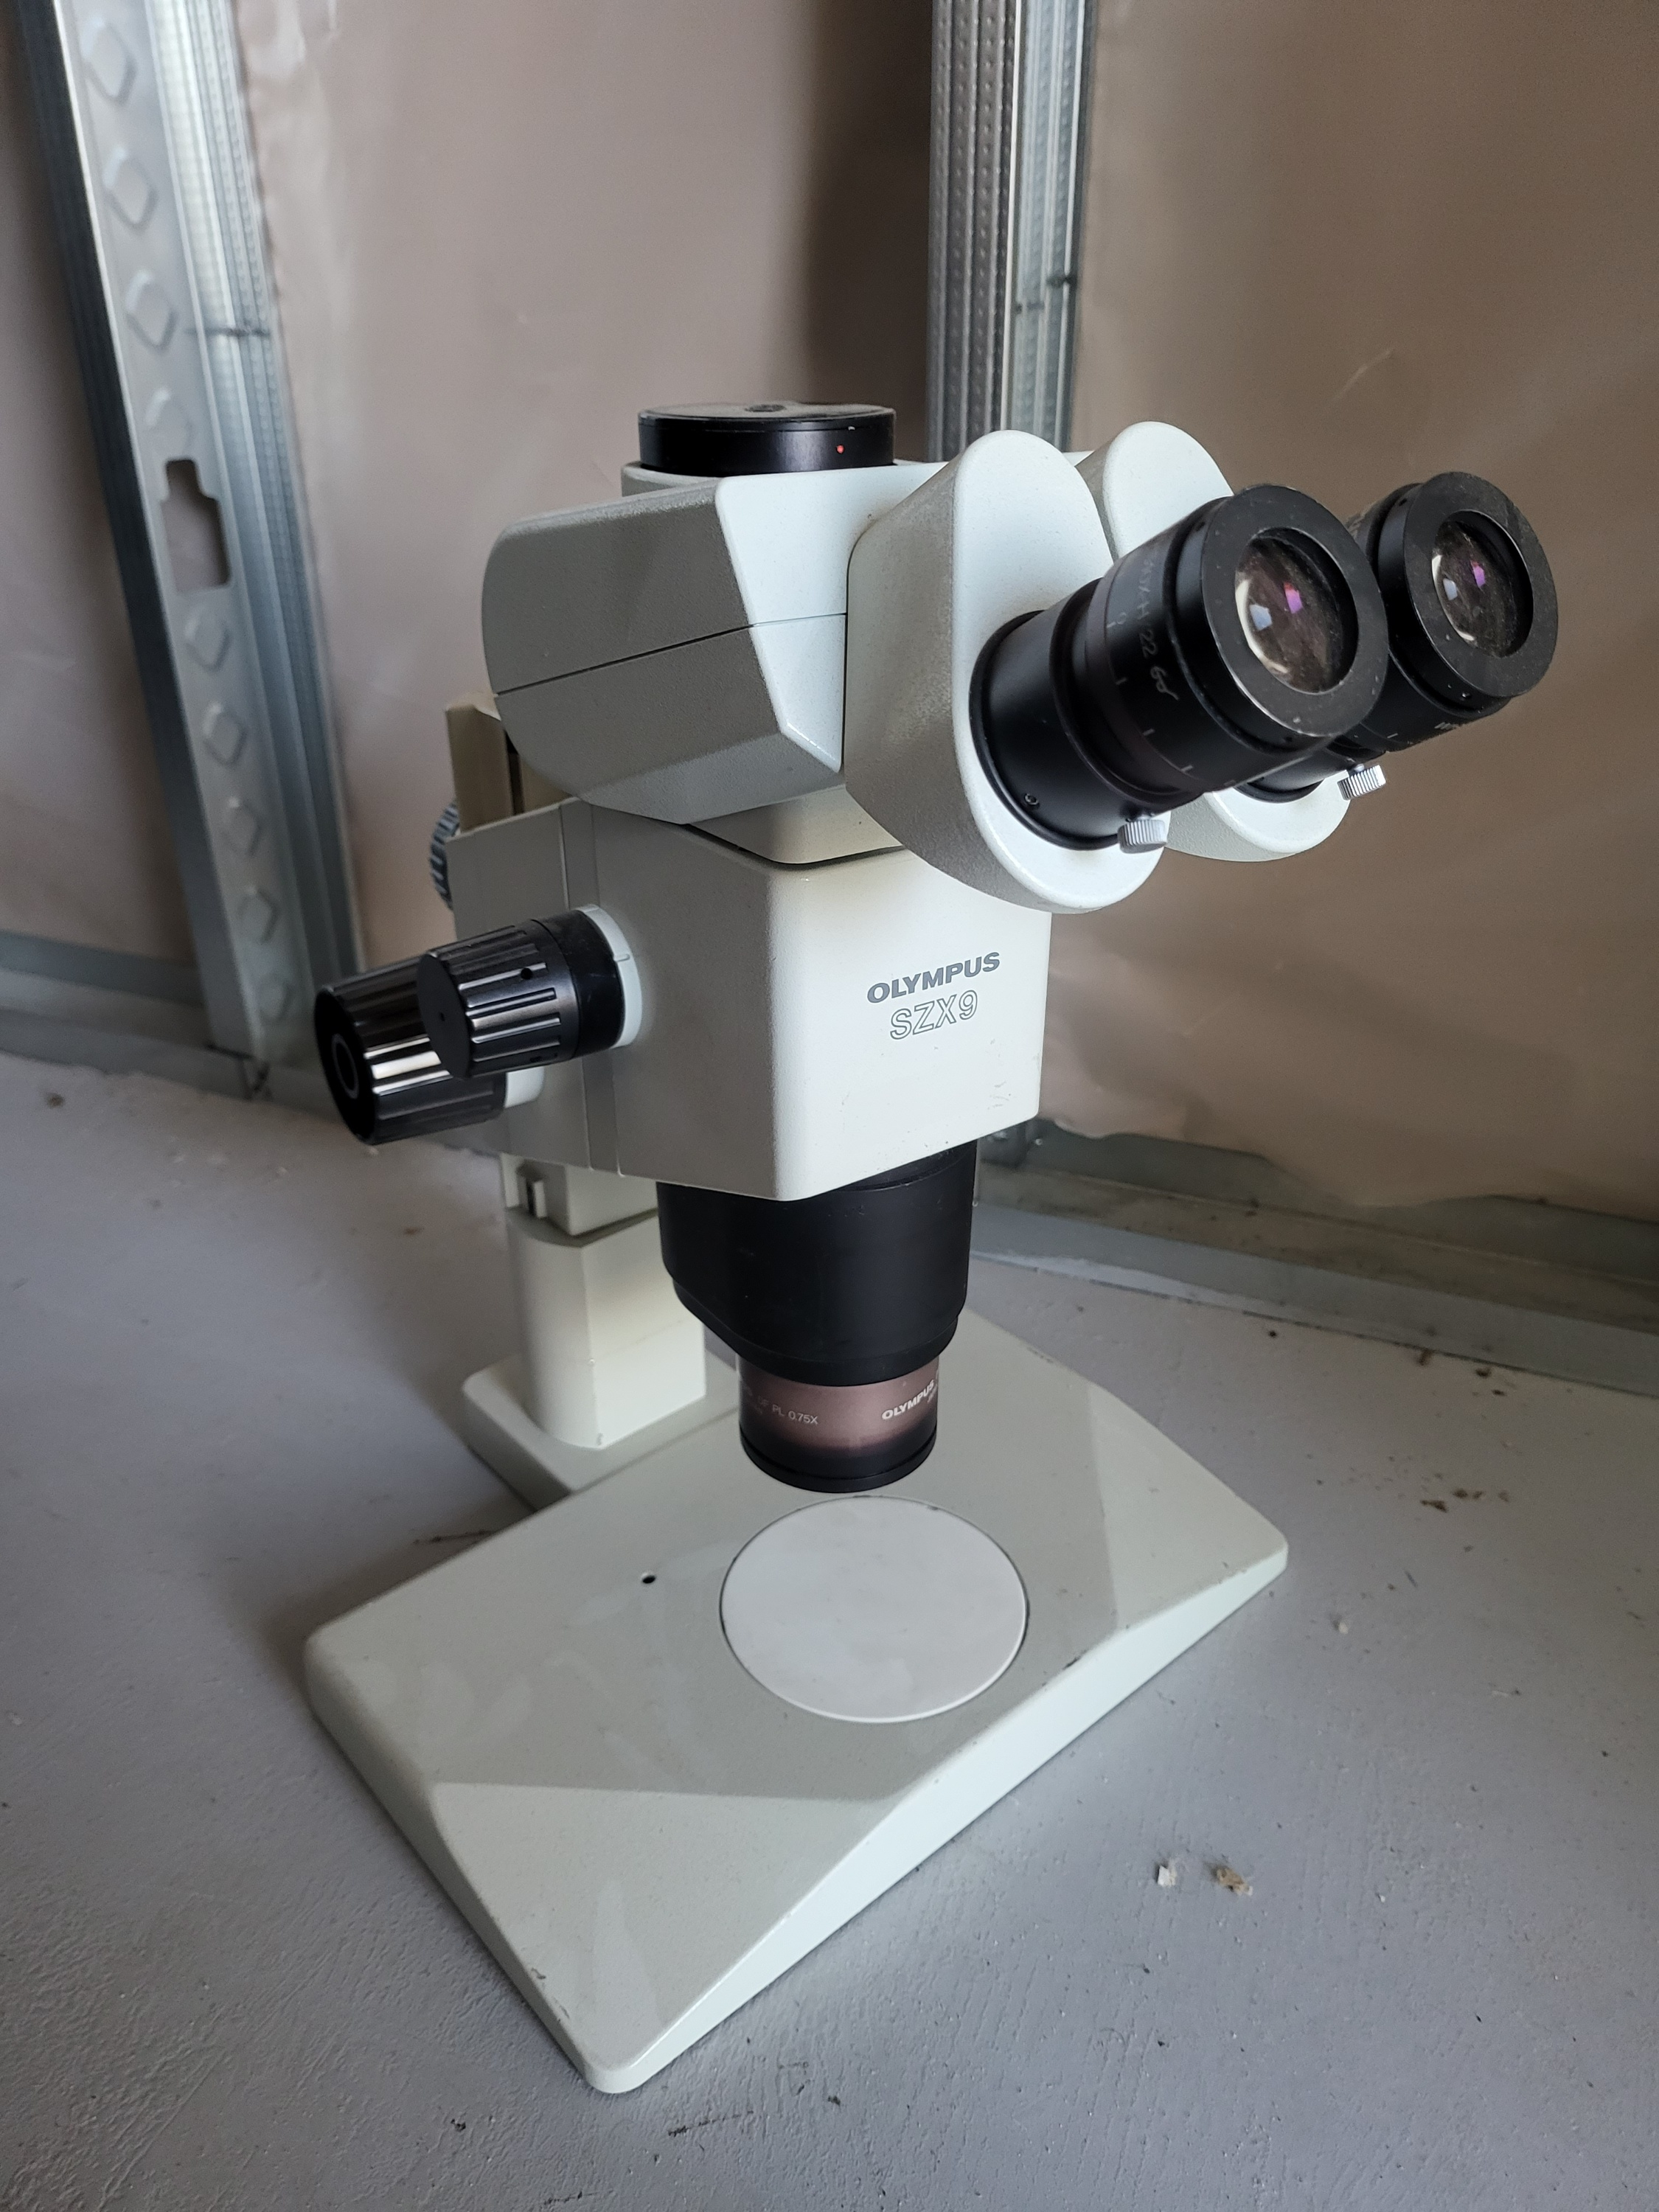 Olympus SZX9 Stereo Microscope